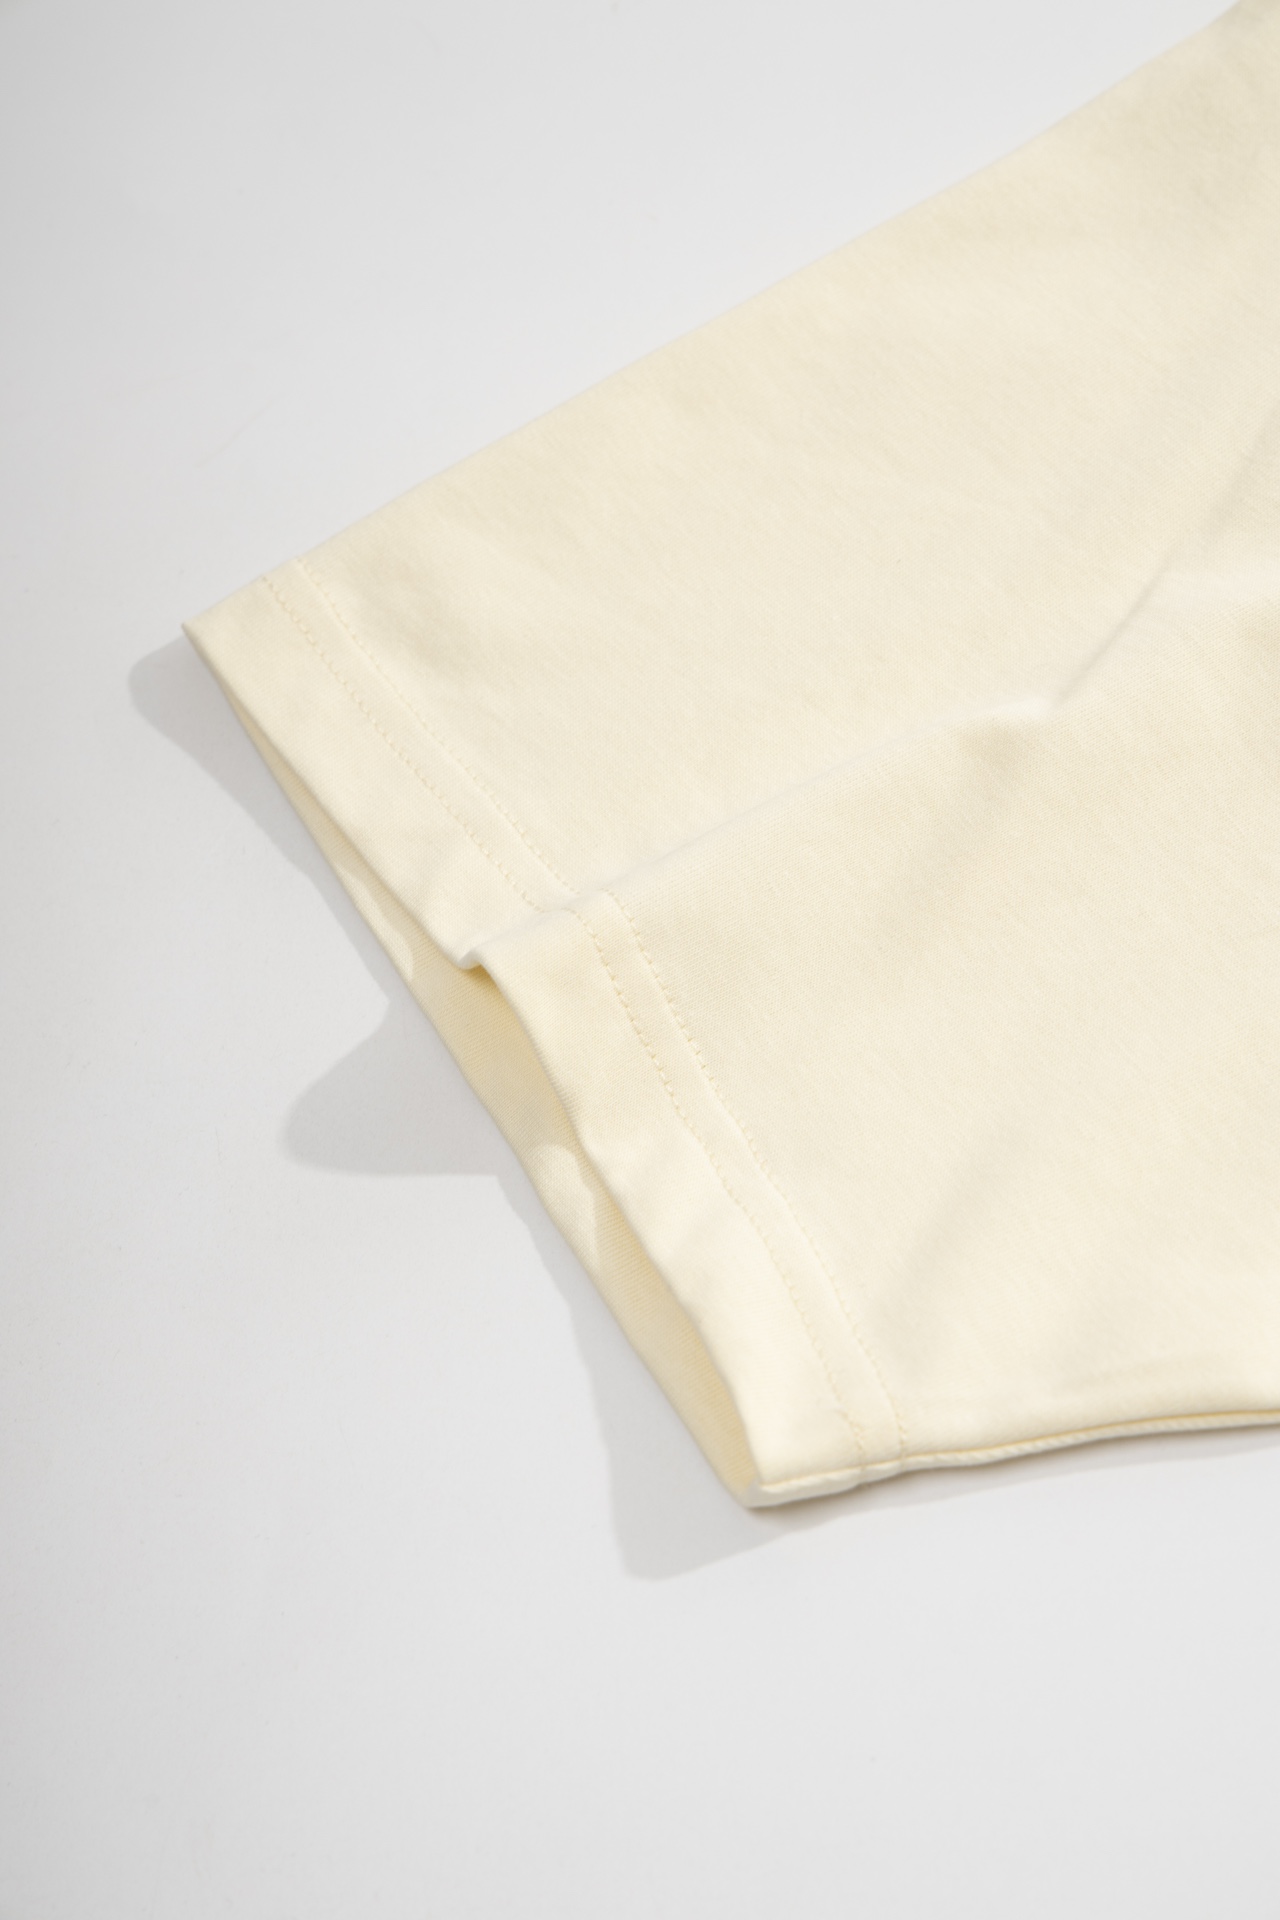 S60GucciGTNF北面联名短袖T恤采用16支100%纯棉260g面料搭配32支1X1棉盖丝罗纹面料